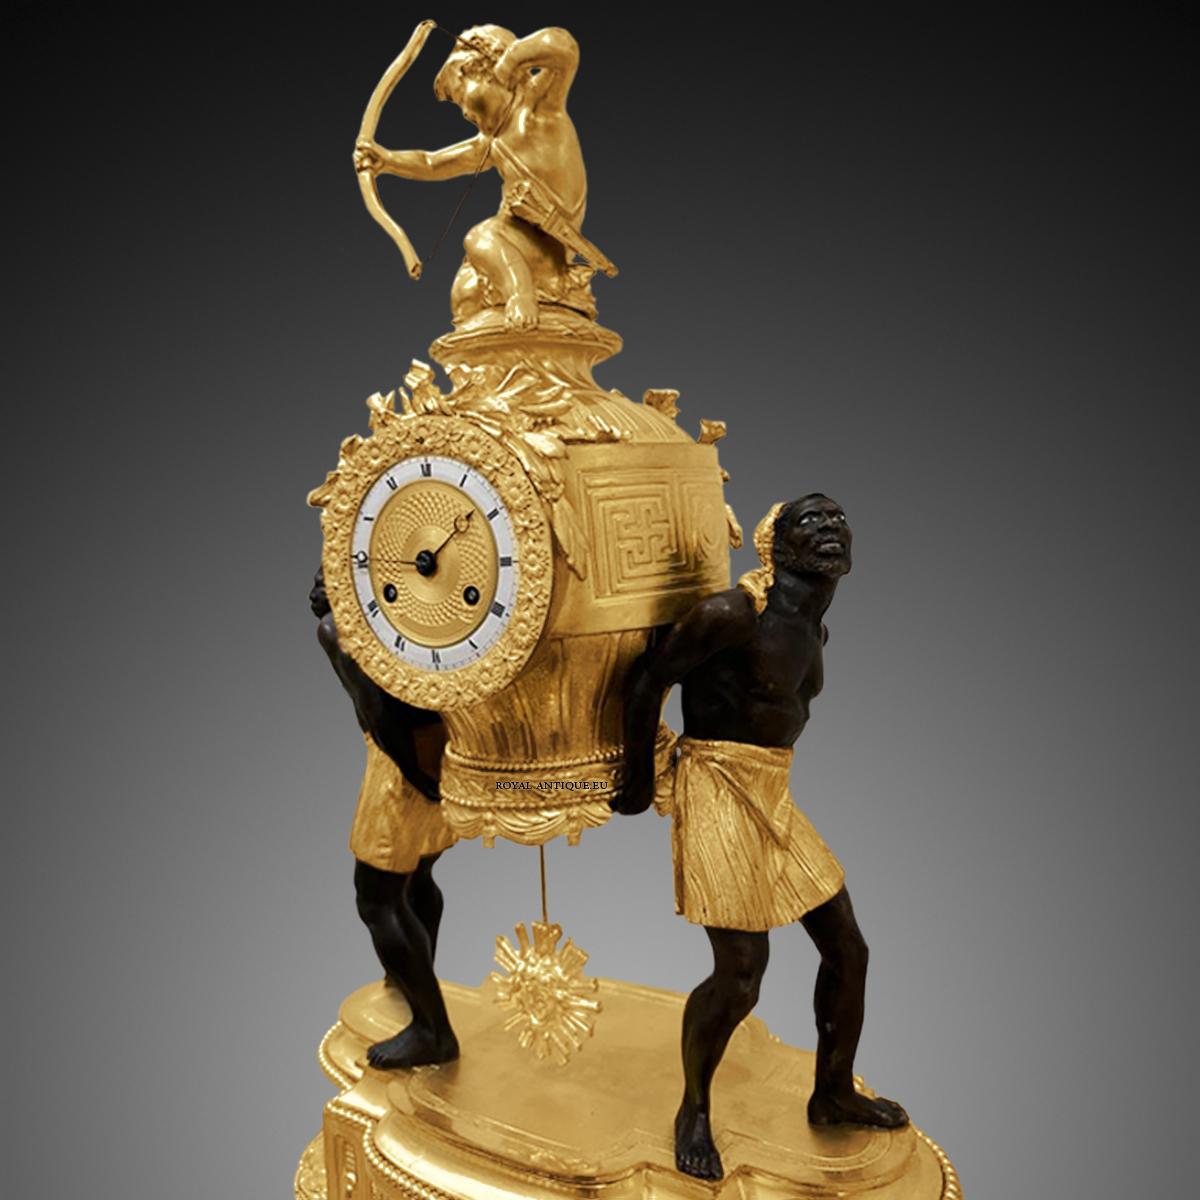 19th Century A Unique Clock From The Period Of Napoleon III